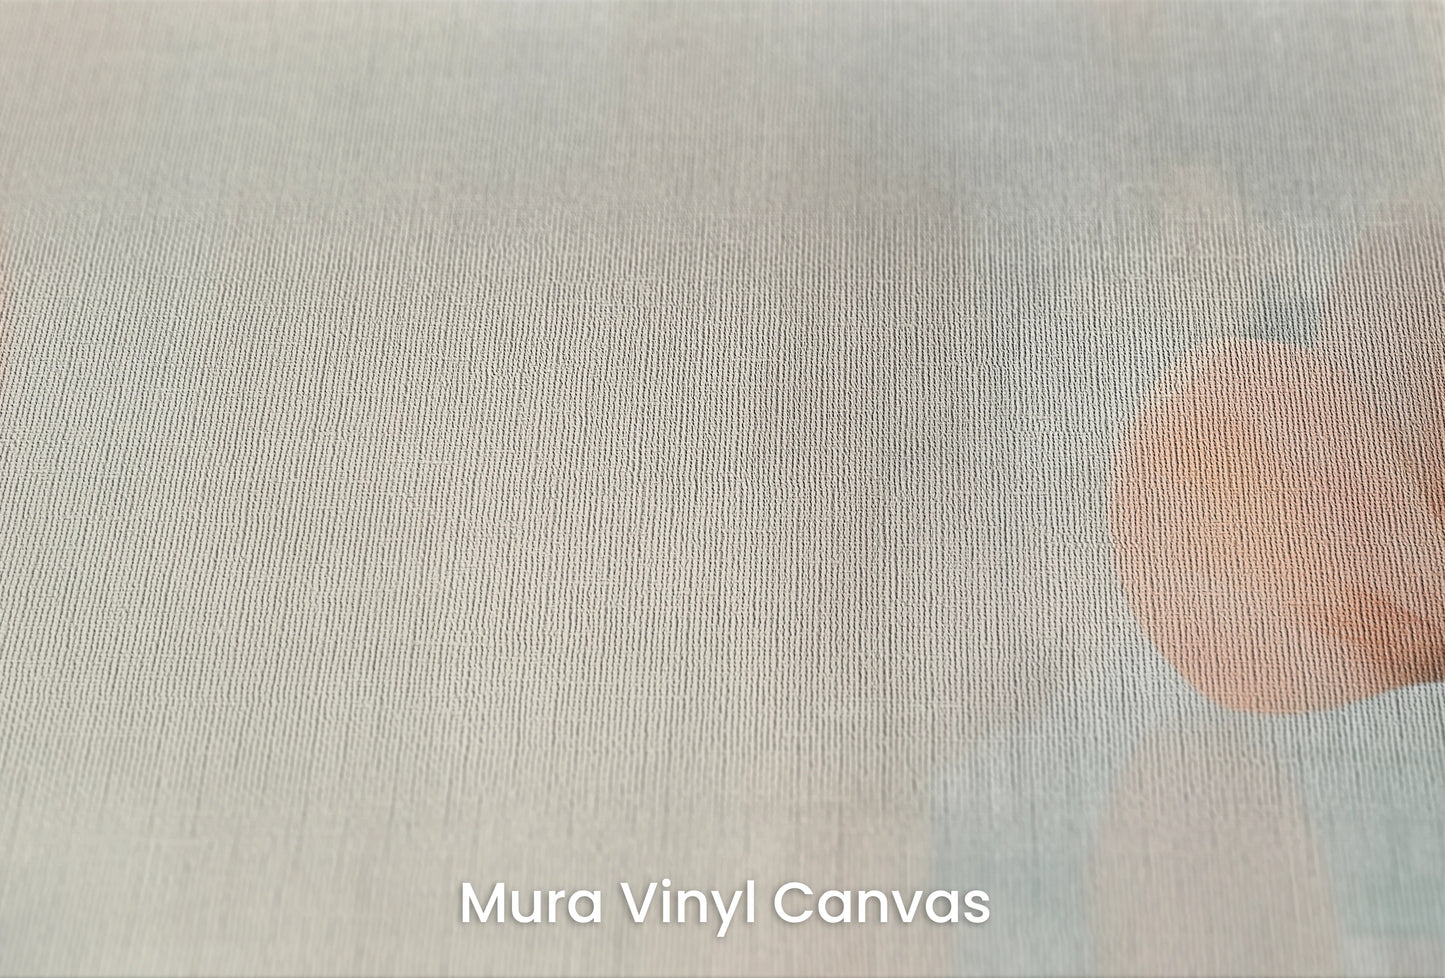 Zbliżenie na artystyczną fototapetę o nazwie Abstract Blossom Art na podłożu Mura Vinyl Canvas - faktura naturalnego płótna.